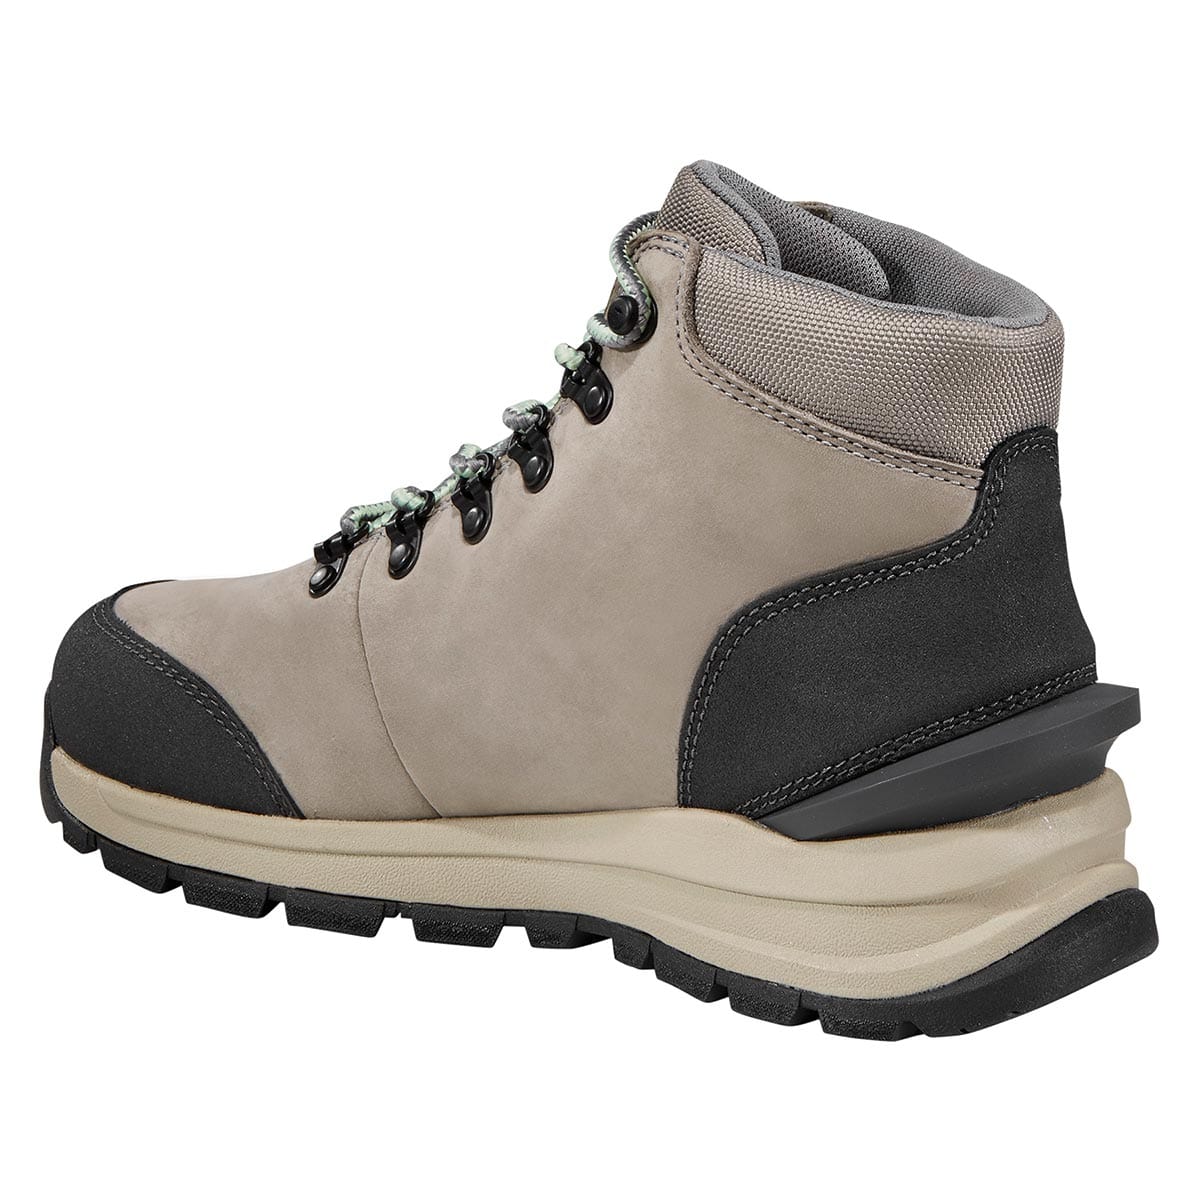 Carhartt Women's Gilmore 5" Work Hiker Boots - Gray